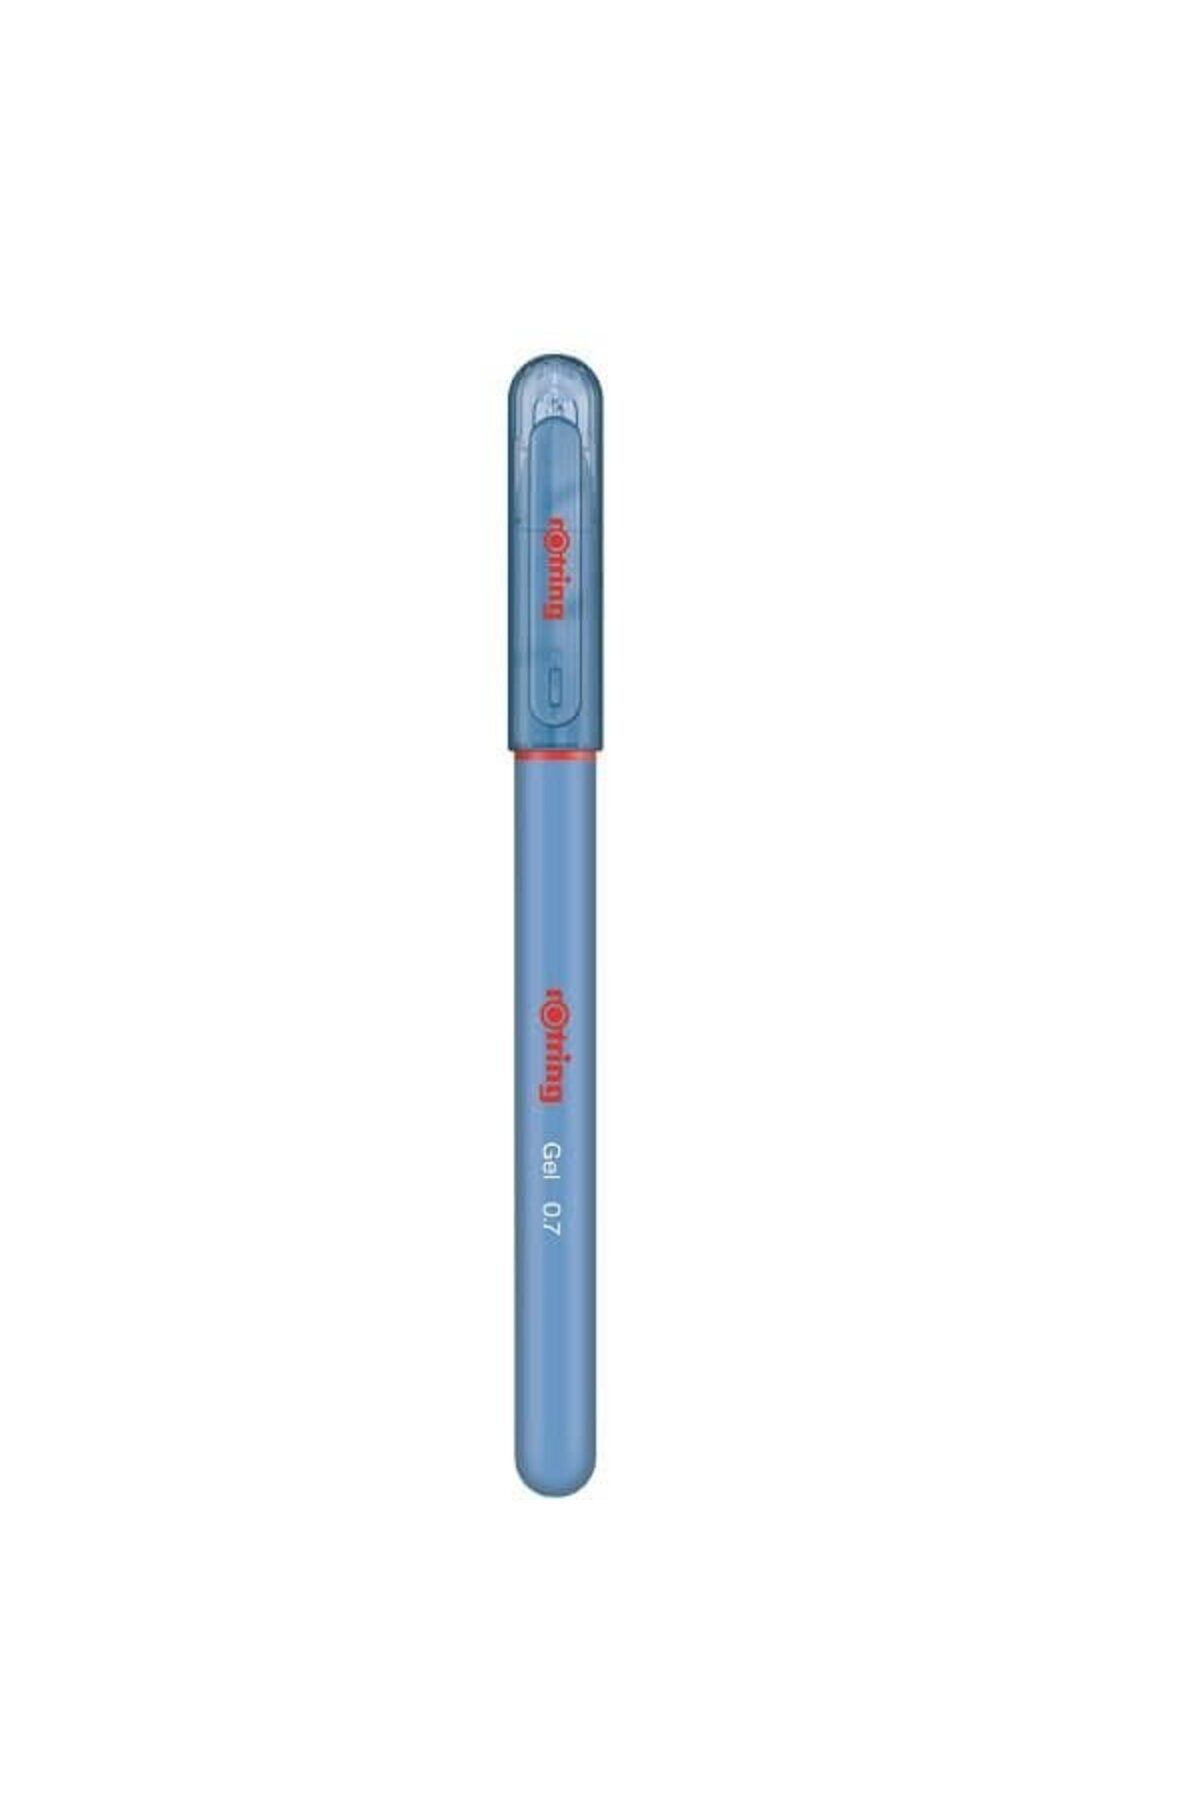 Rotring Jel Mürekkepli Kalem 0.7 Mm Açık Mavi